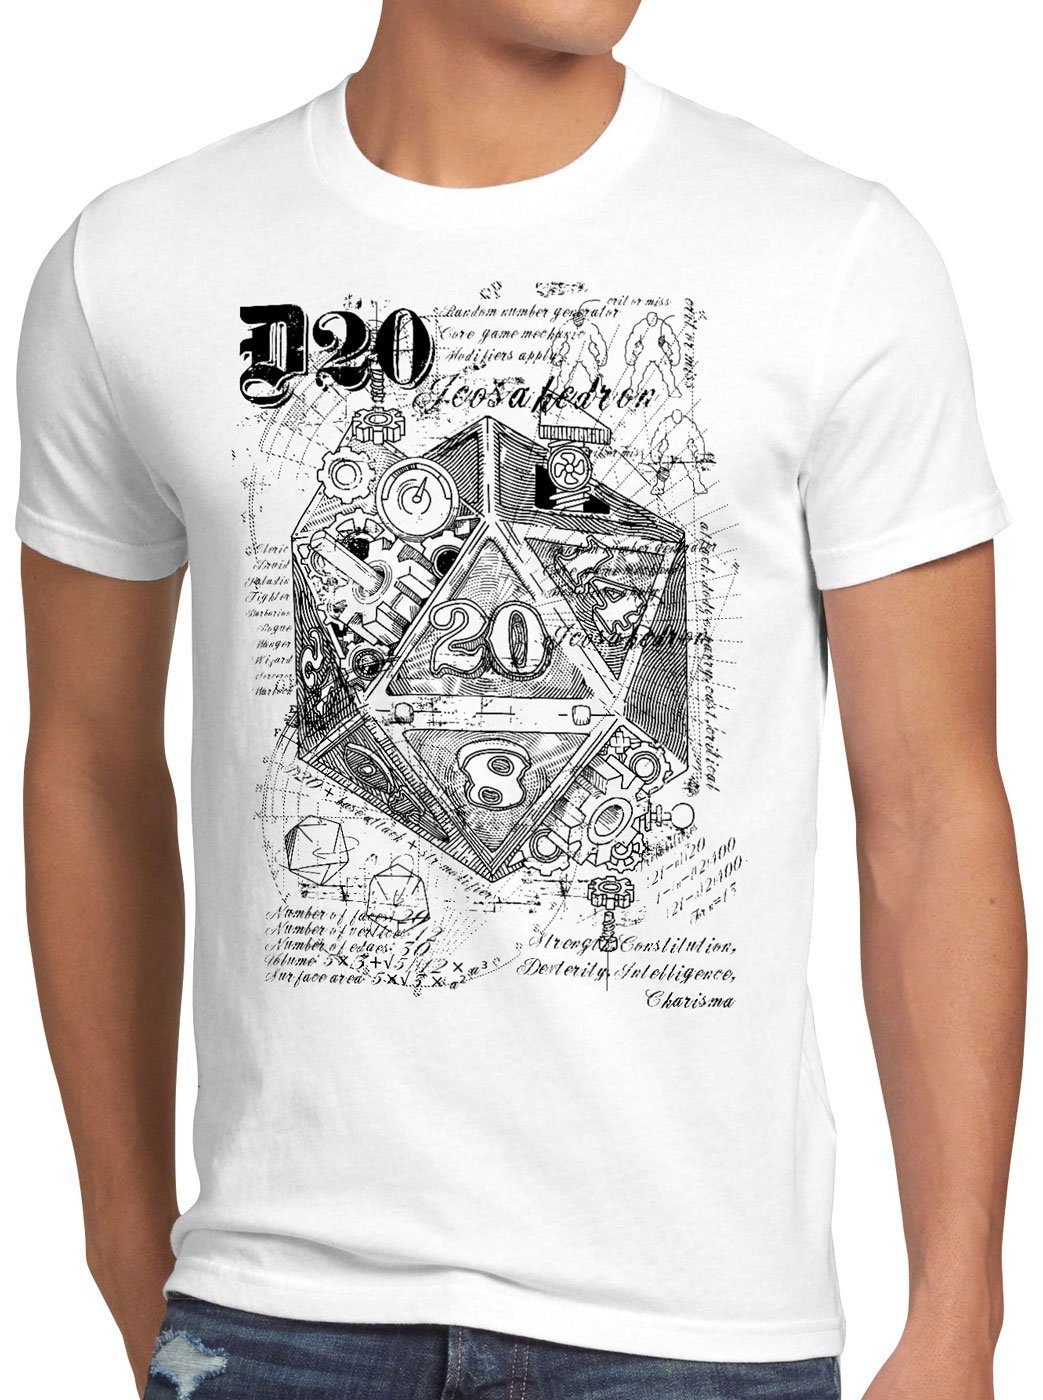 style3 Print-Shirt Herren T-Shirt D20 Da Vinci dragons würfel dungeon weiß